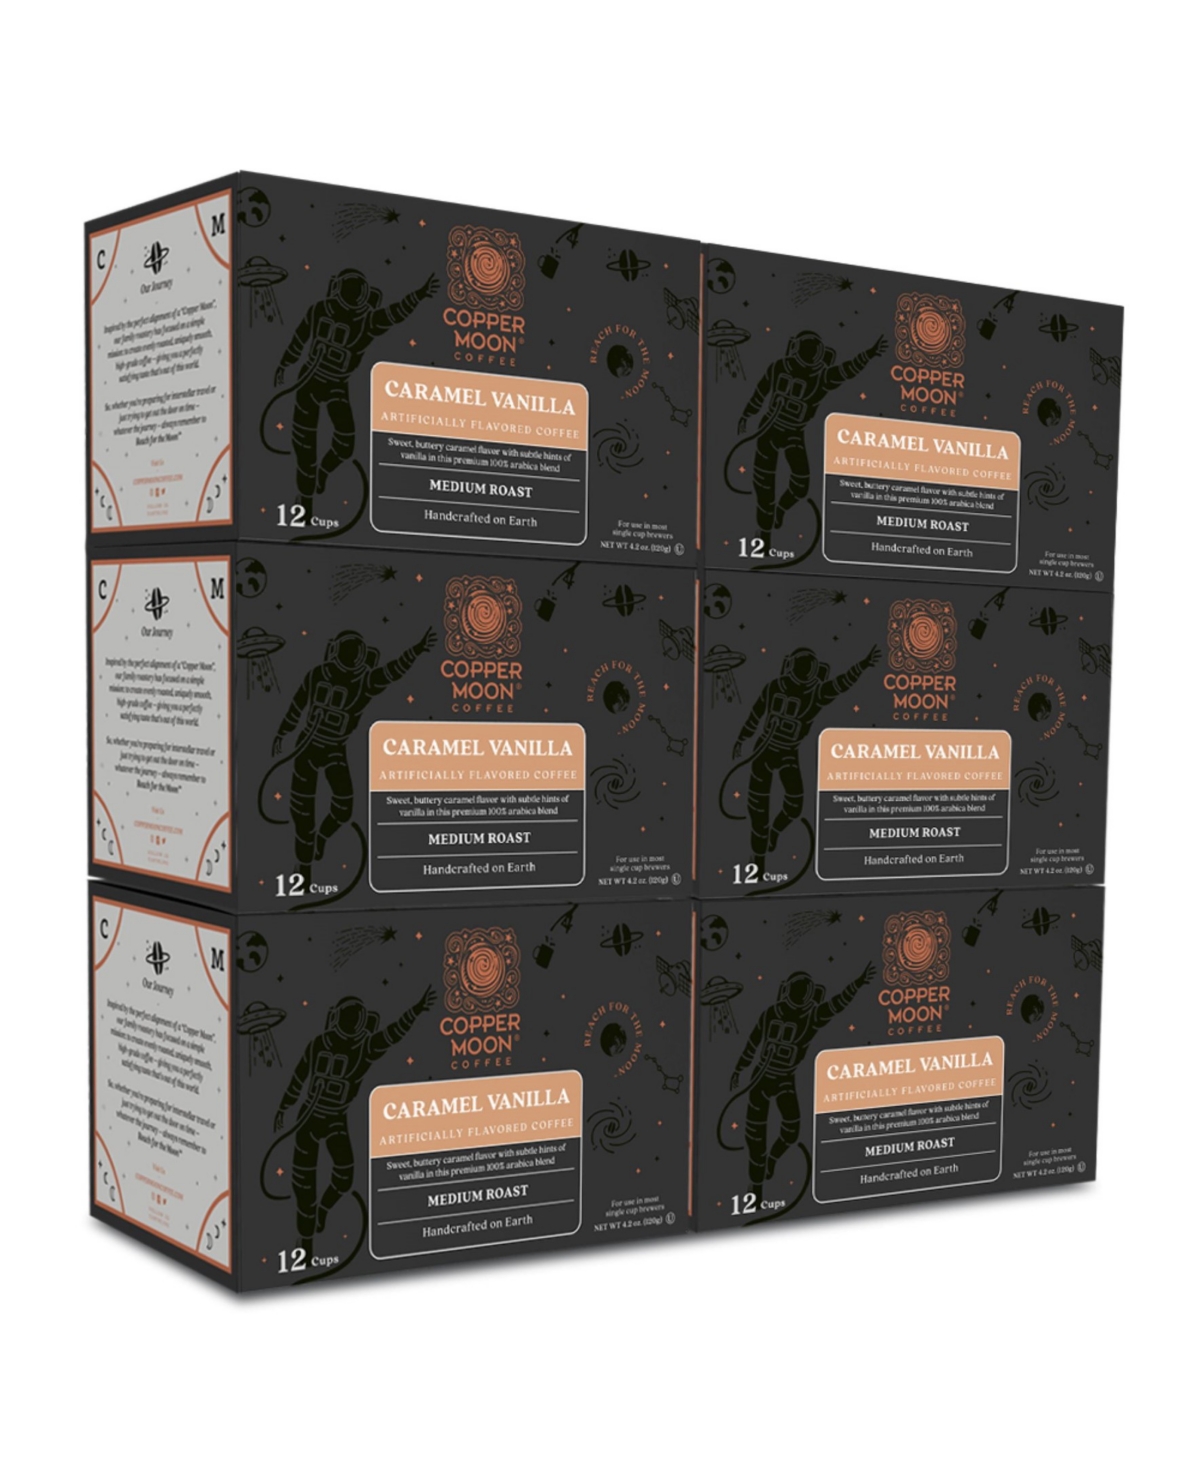 Copper Moon Coffee Caramel Vanilla Single Serve Coffee Pods, 72 Count